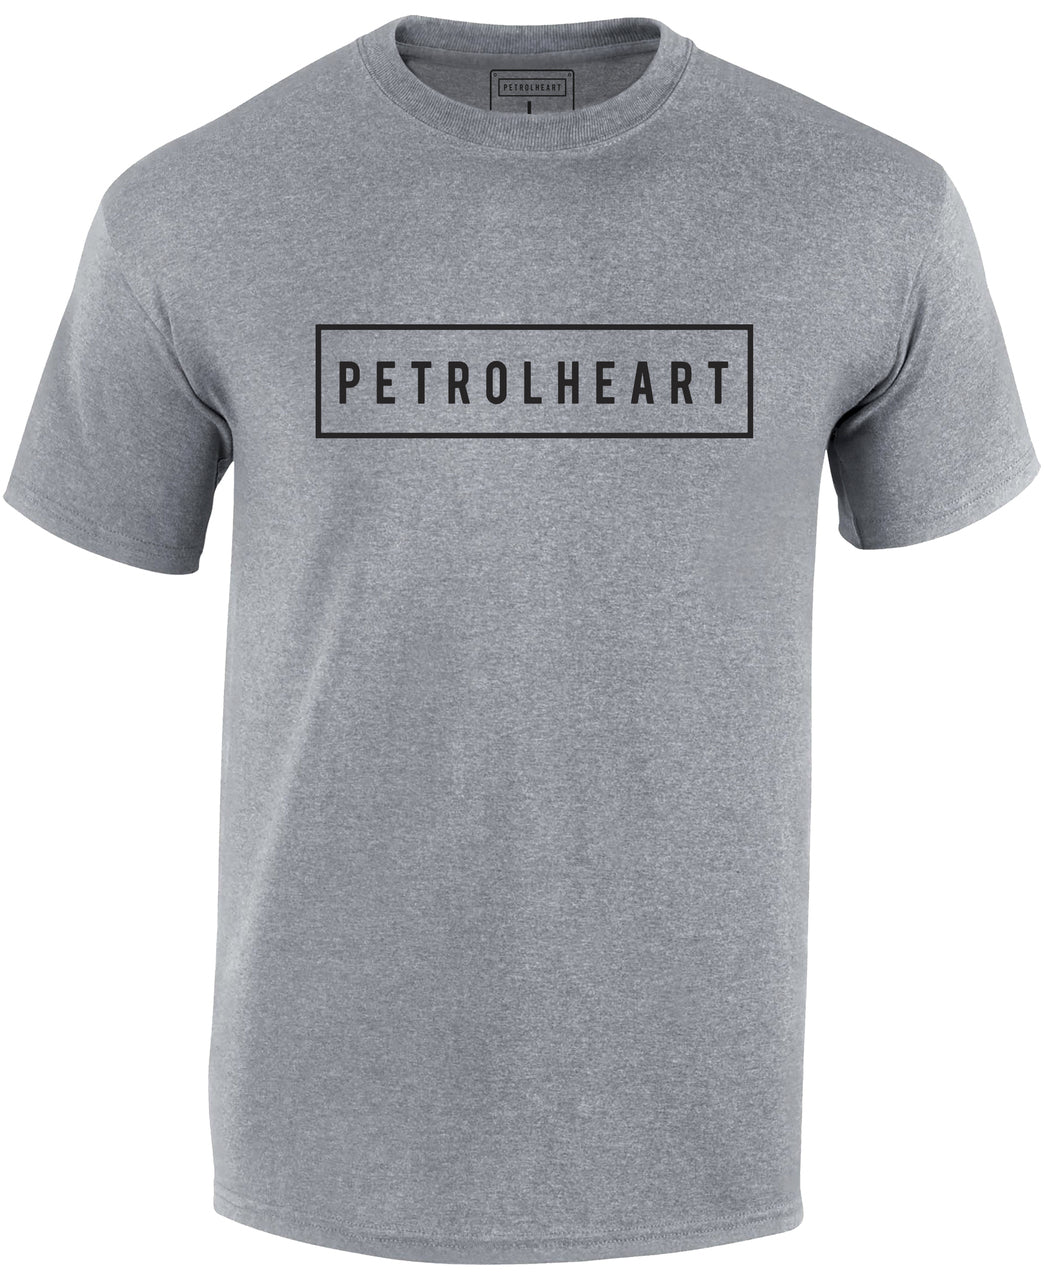 Petrolheart